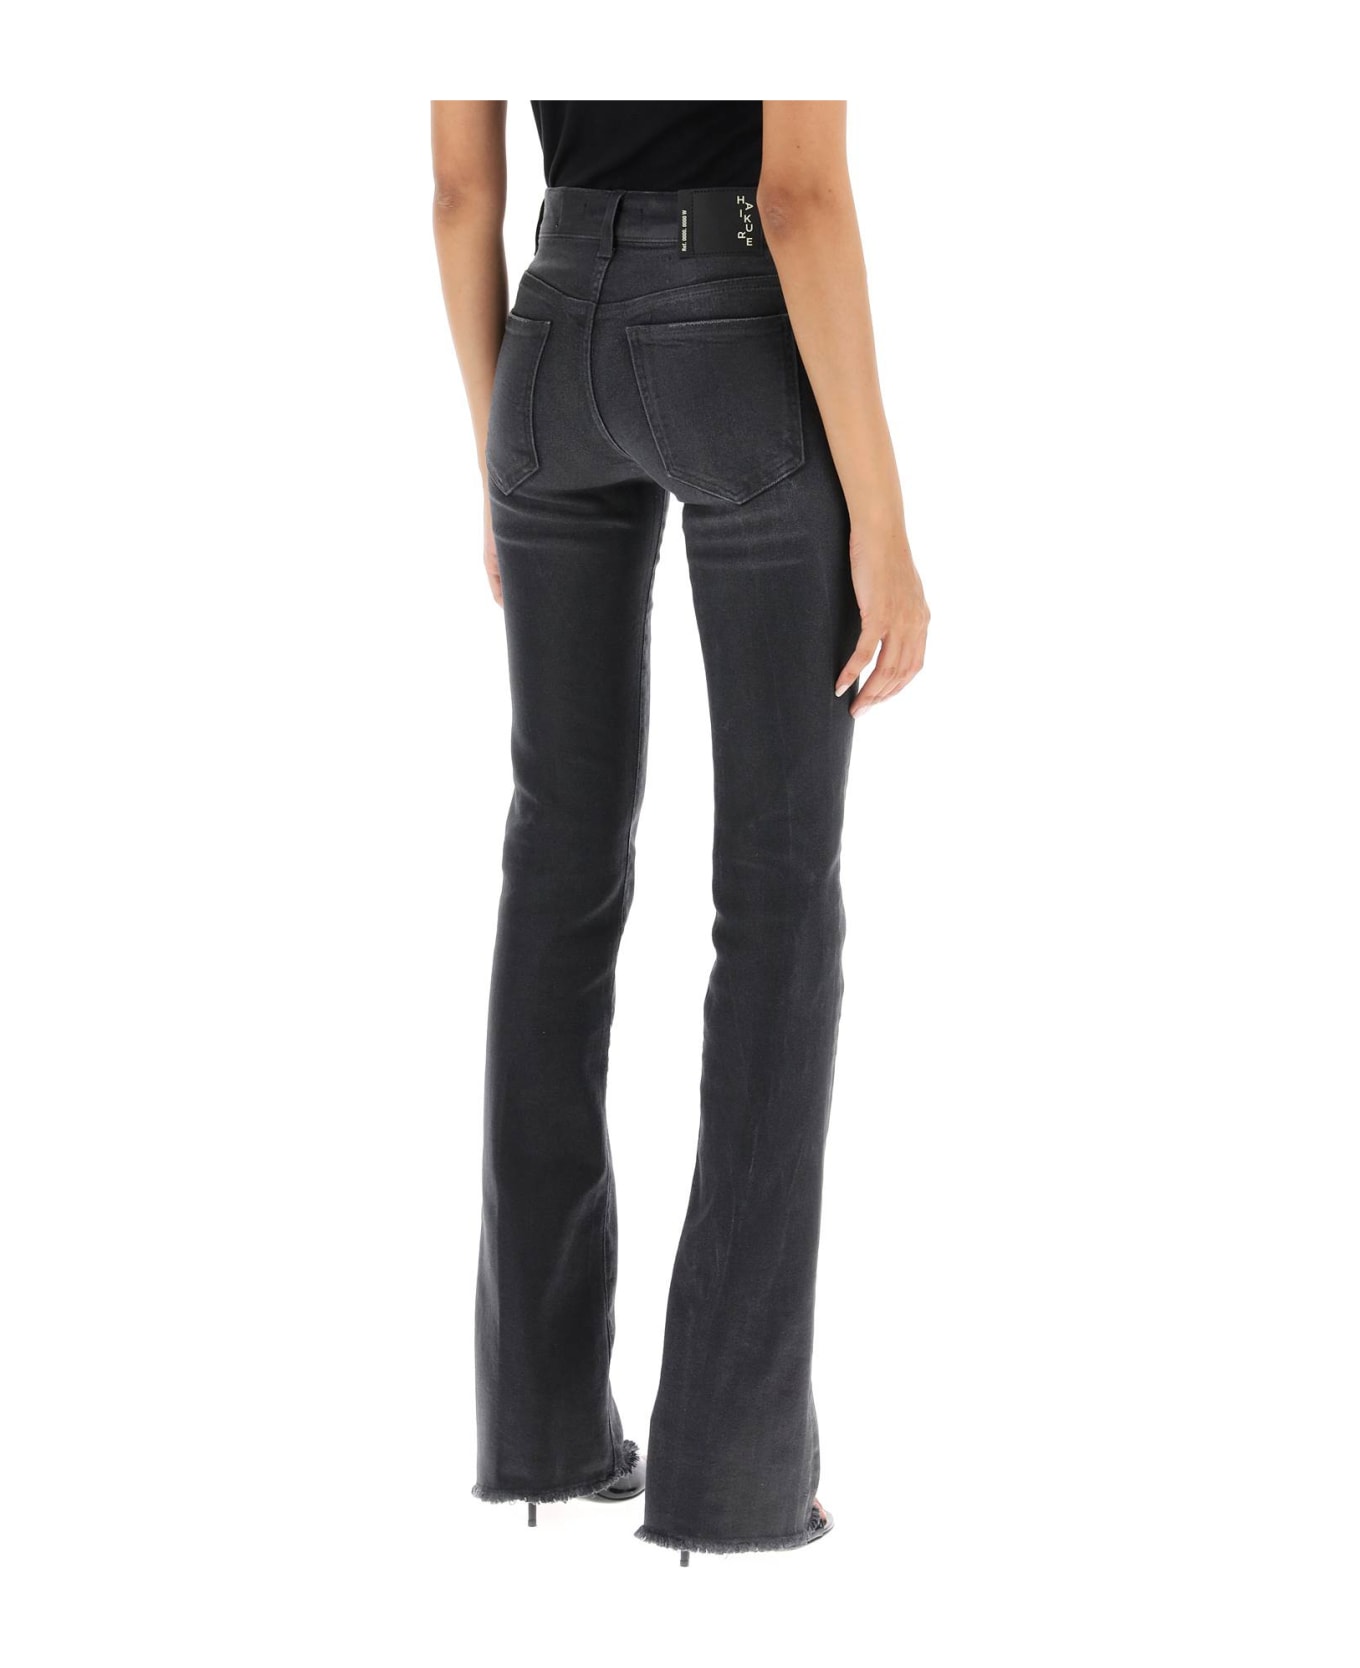 Haikure Formentera Long Bootcut Jeans - MID BLACK COATED (Black)